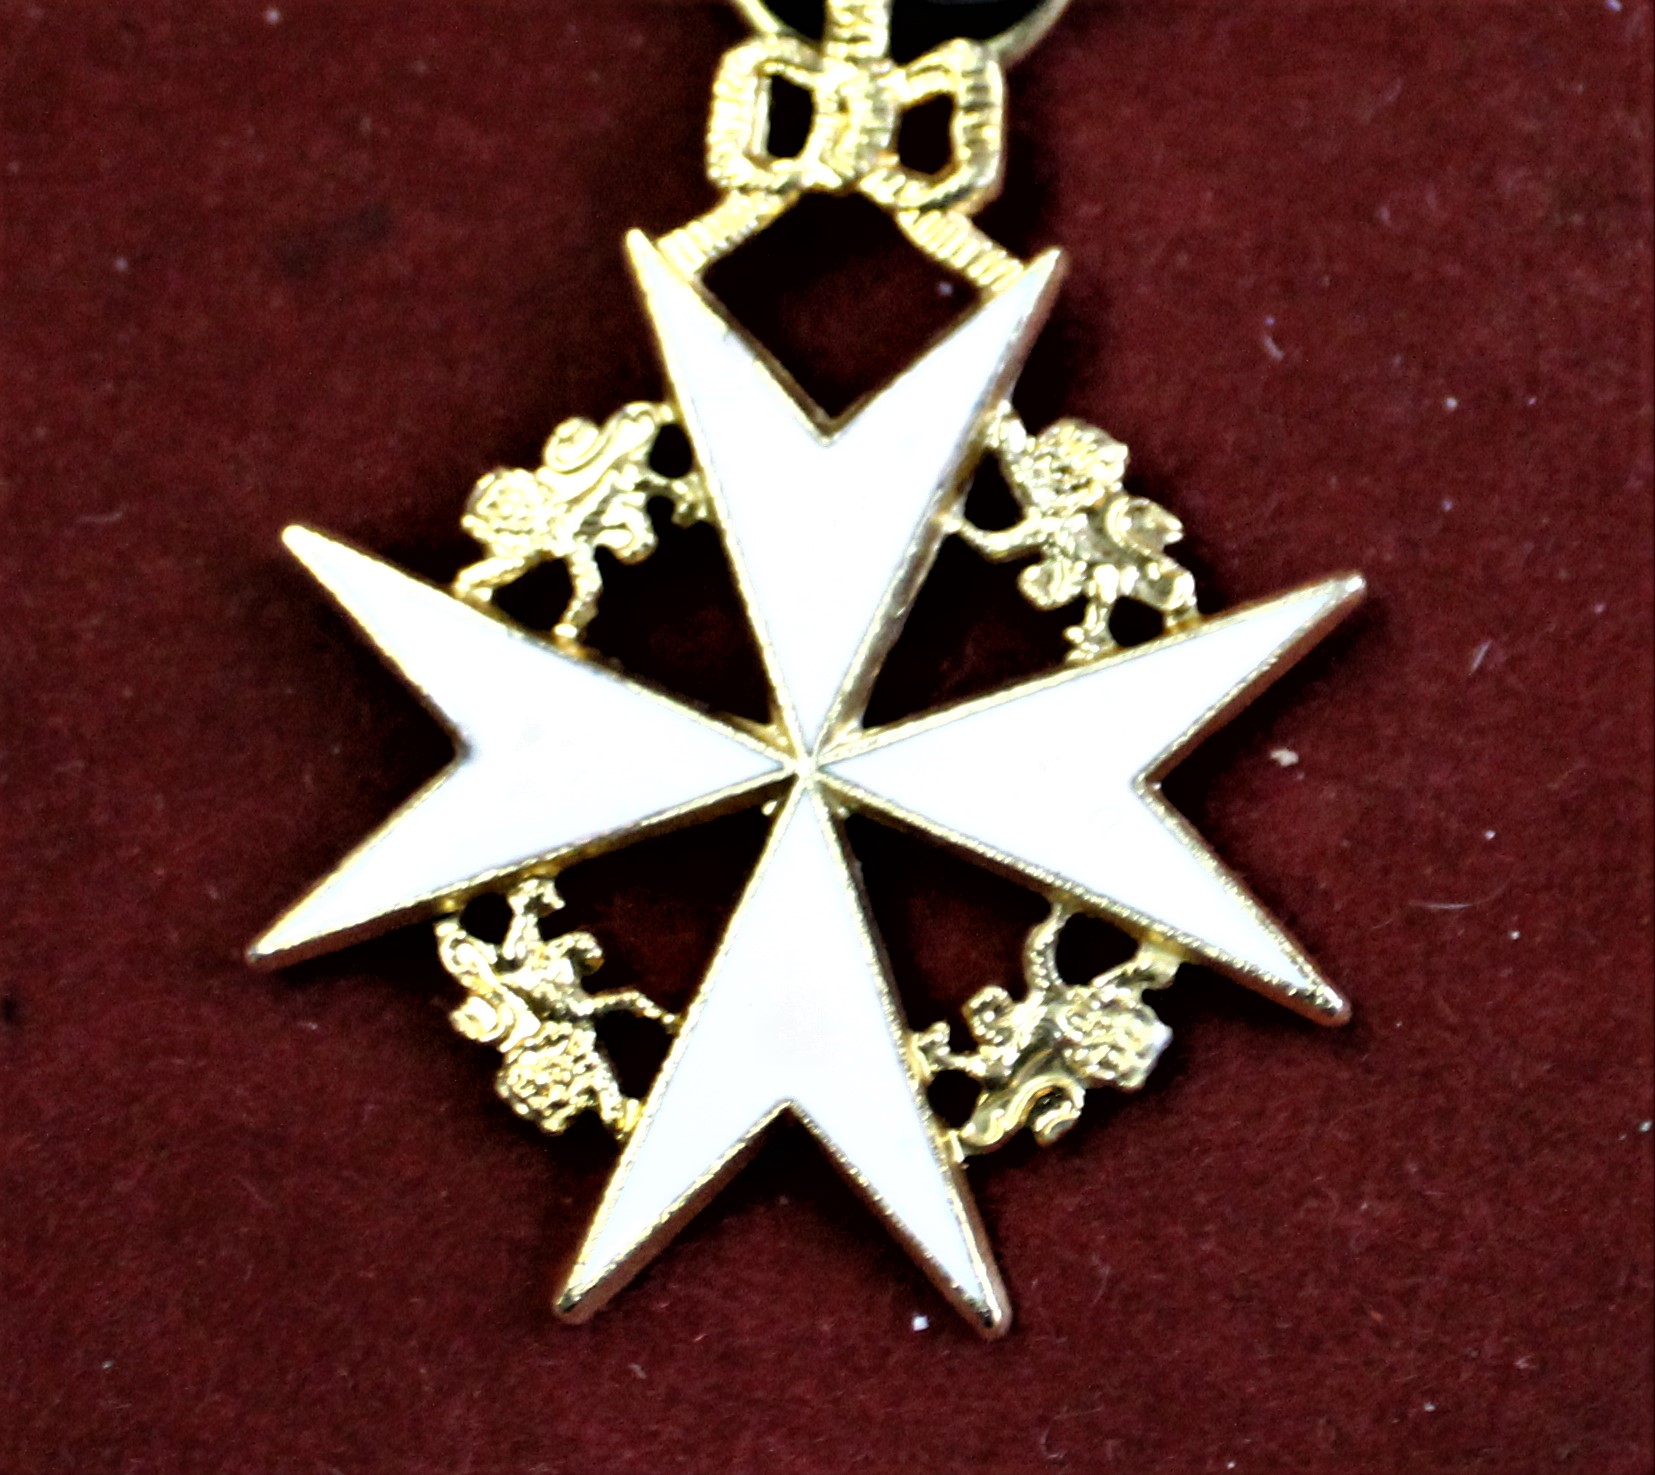 Masonic Regalia Knight Of Malta Breast Jewel in gilt and enamel - Image 3 of 3